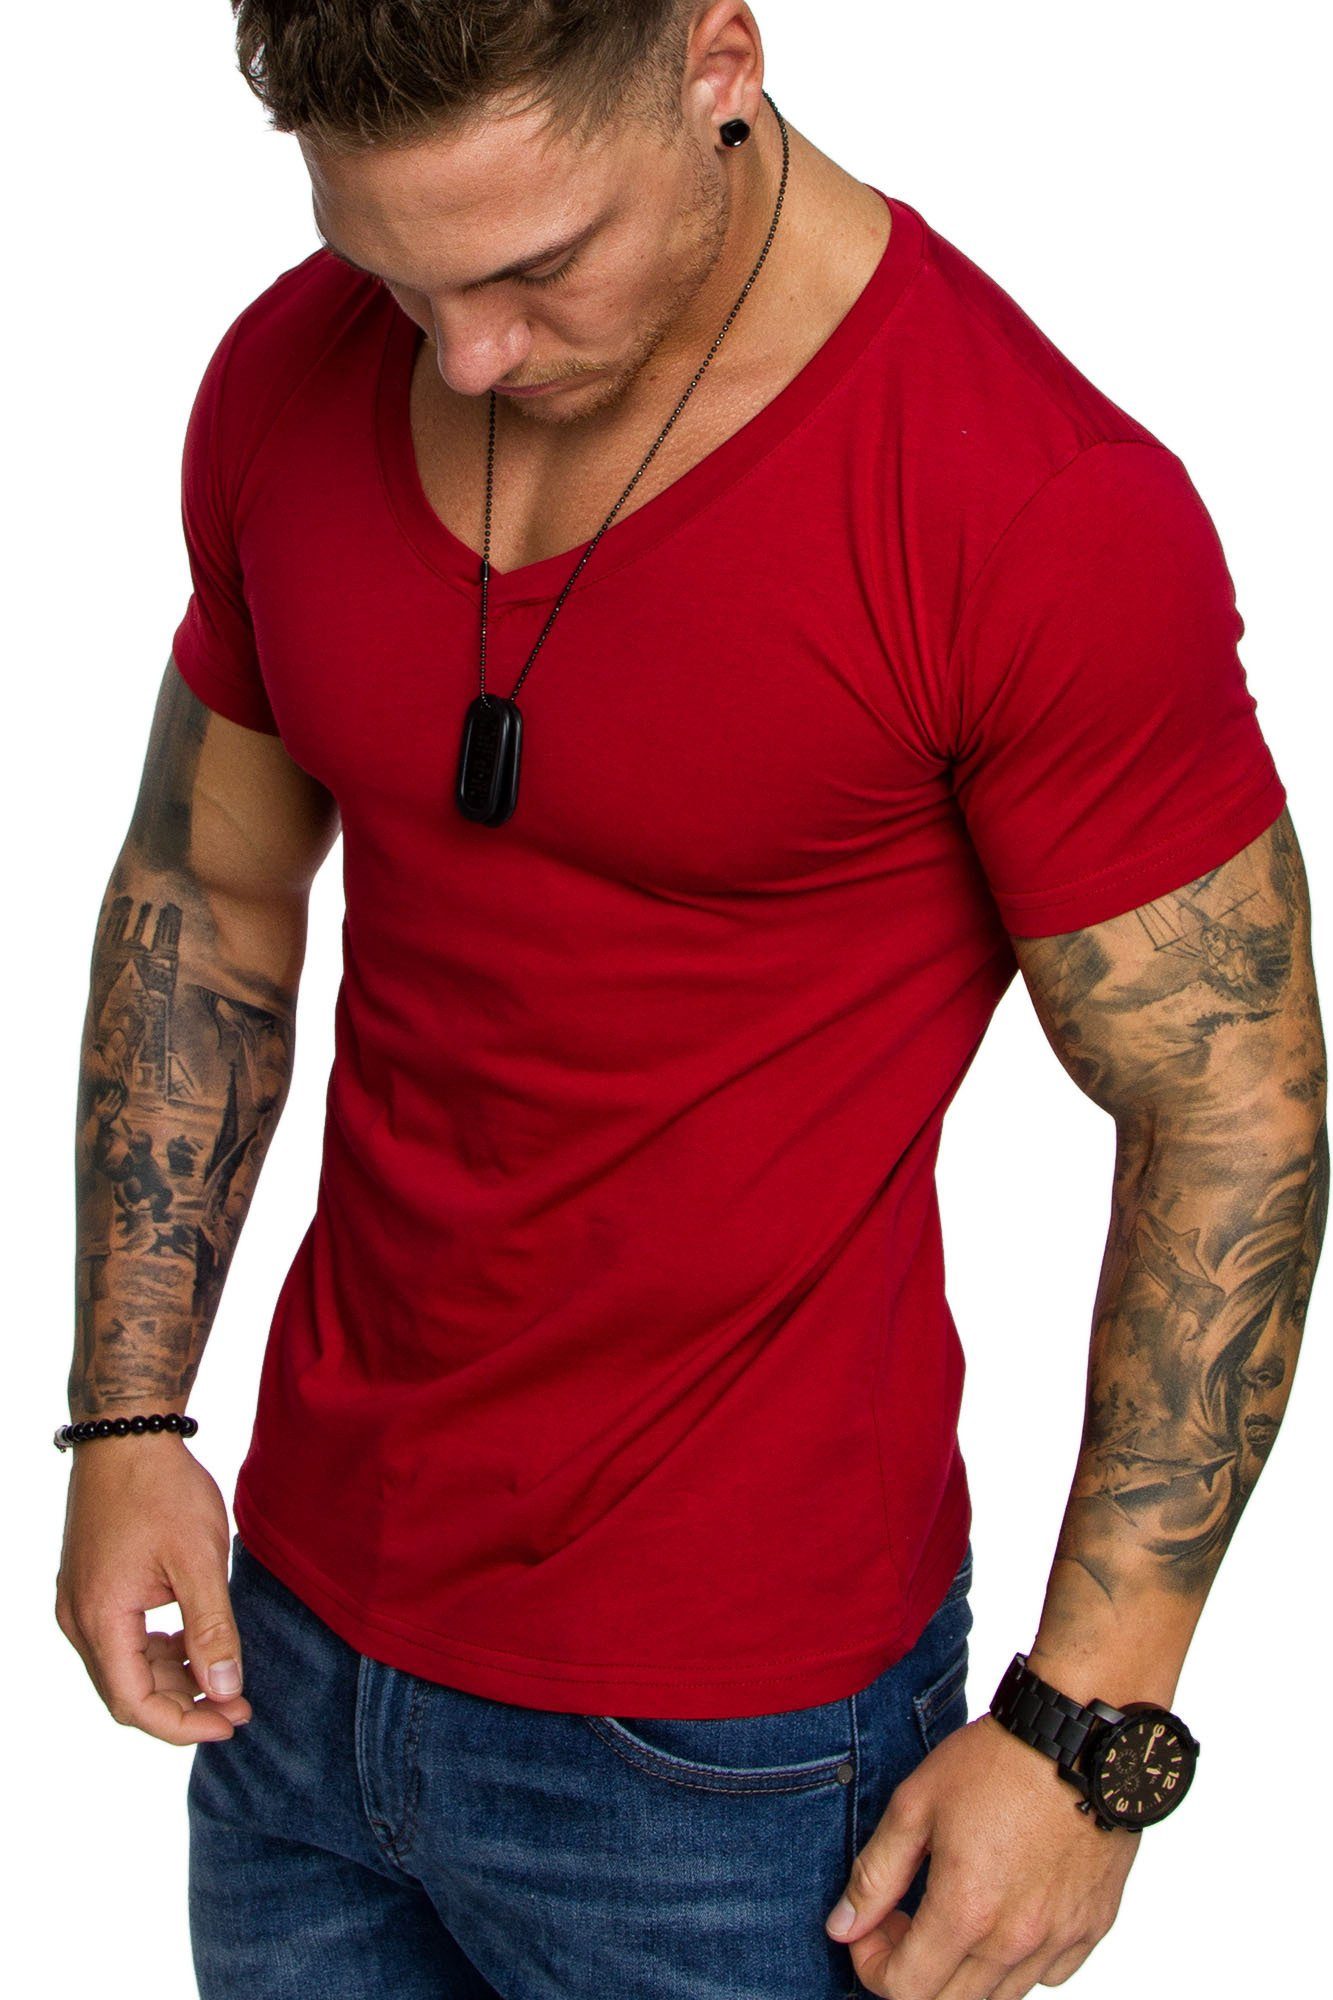 Amaci&Sons T-Shirt EUGENE Basic T-Shirt mit V-Ausschnitt Herren Einfarbig Vintage V-Neck Basic V-Ausschnitt Shirt Rot